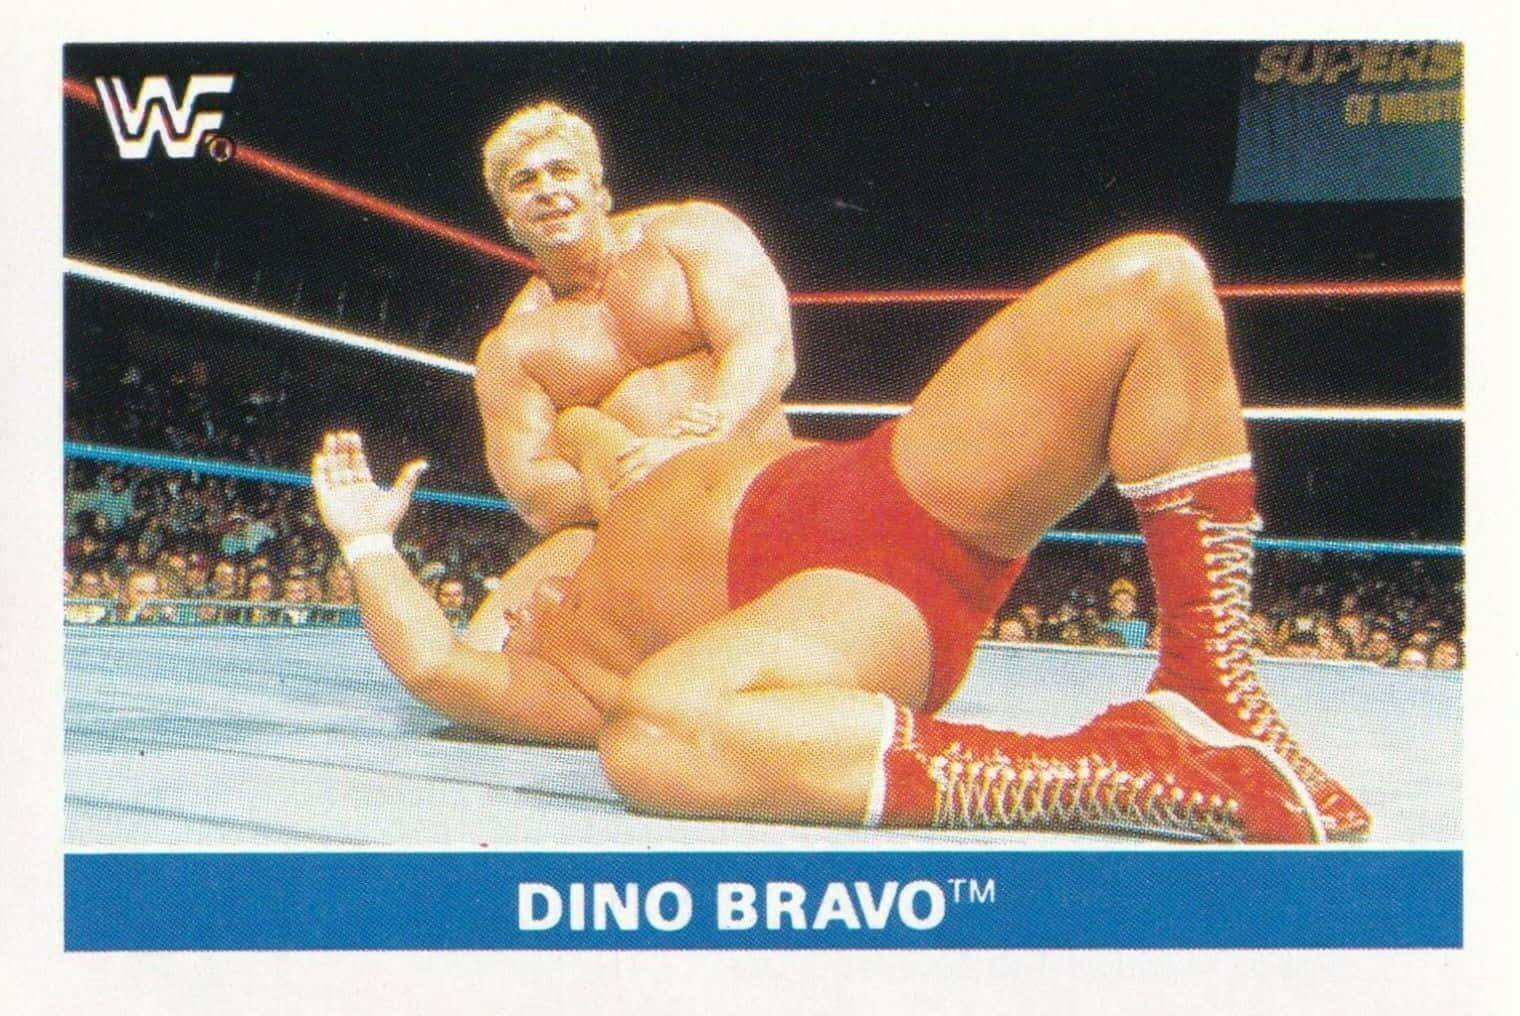 Dino Bravo 1991 WWF Wrestling Card Cover vil pryde din computer! Wallpaper